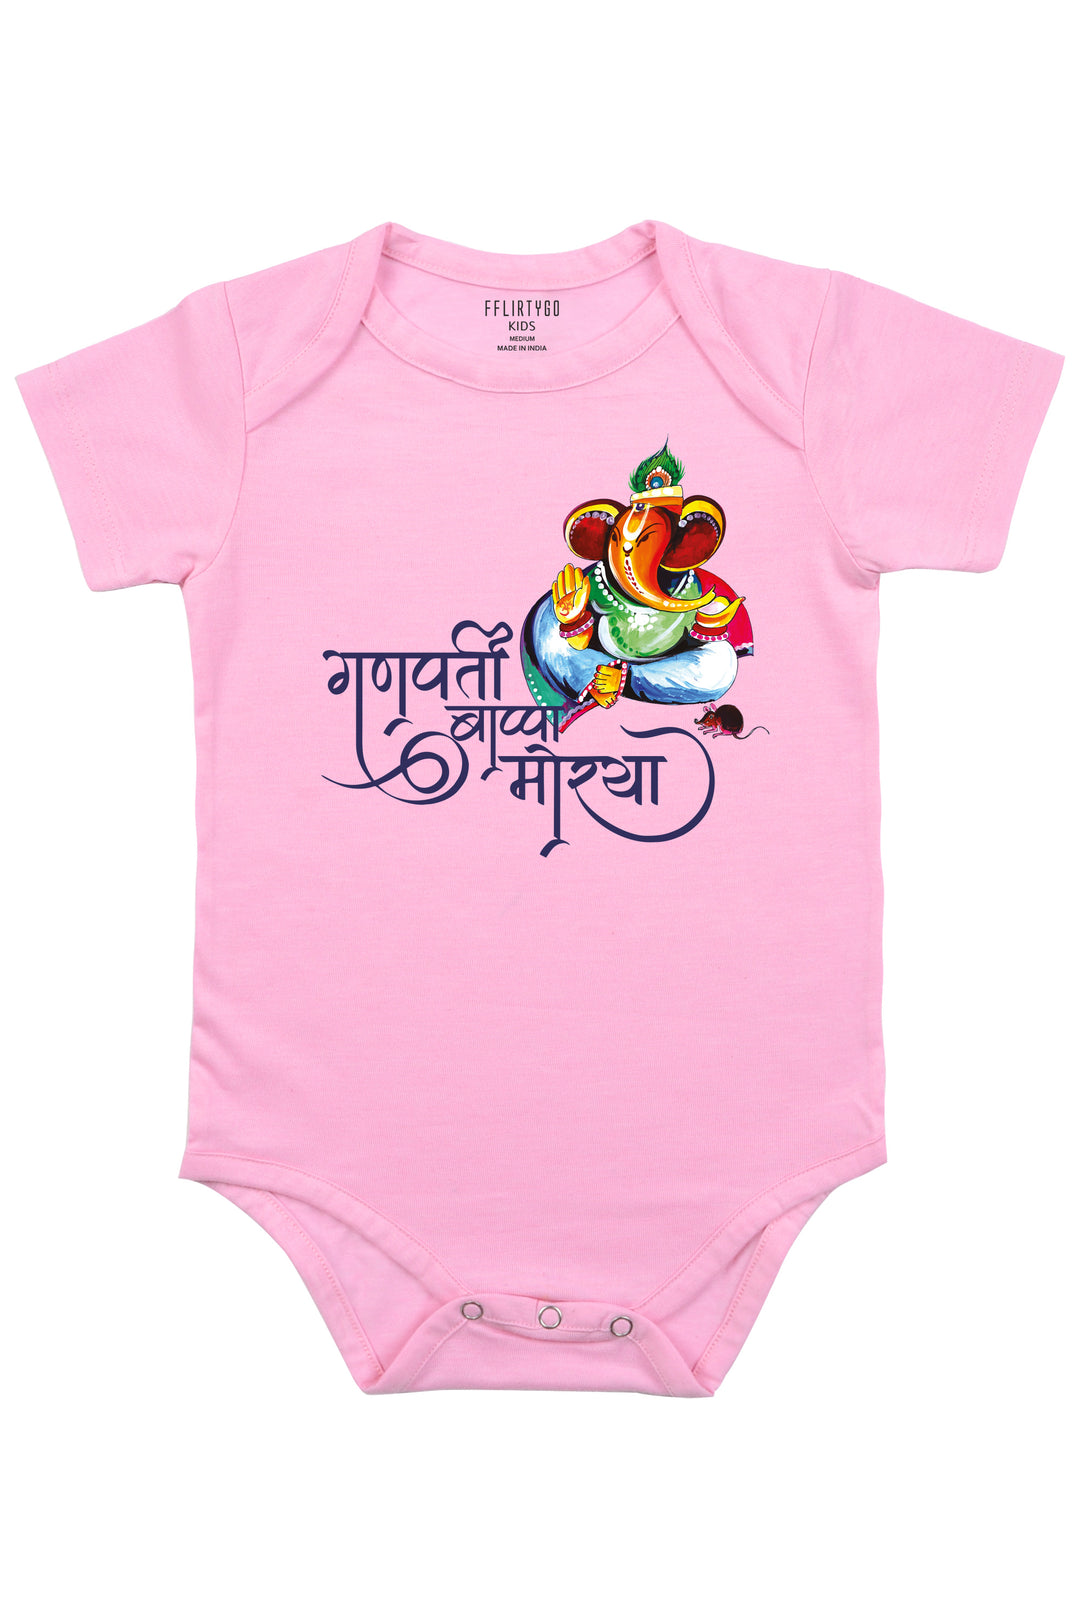 Ganpati Bappa Morya Baby Romper | Onesies